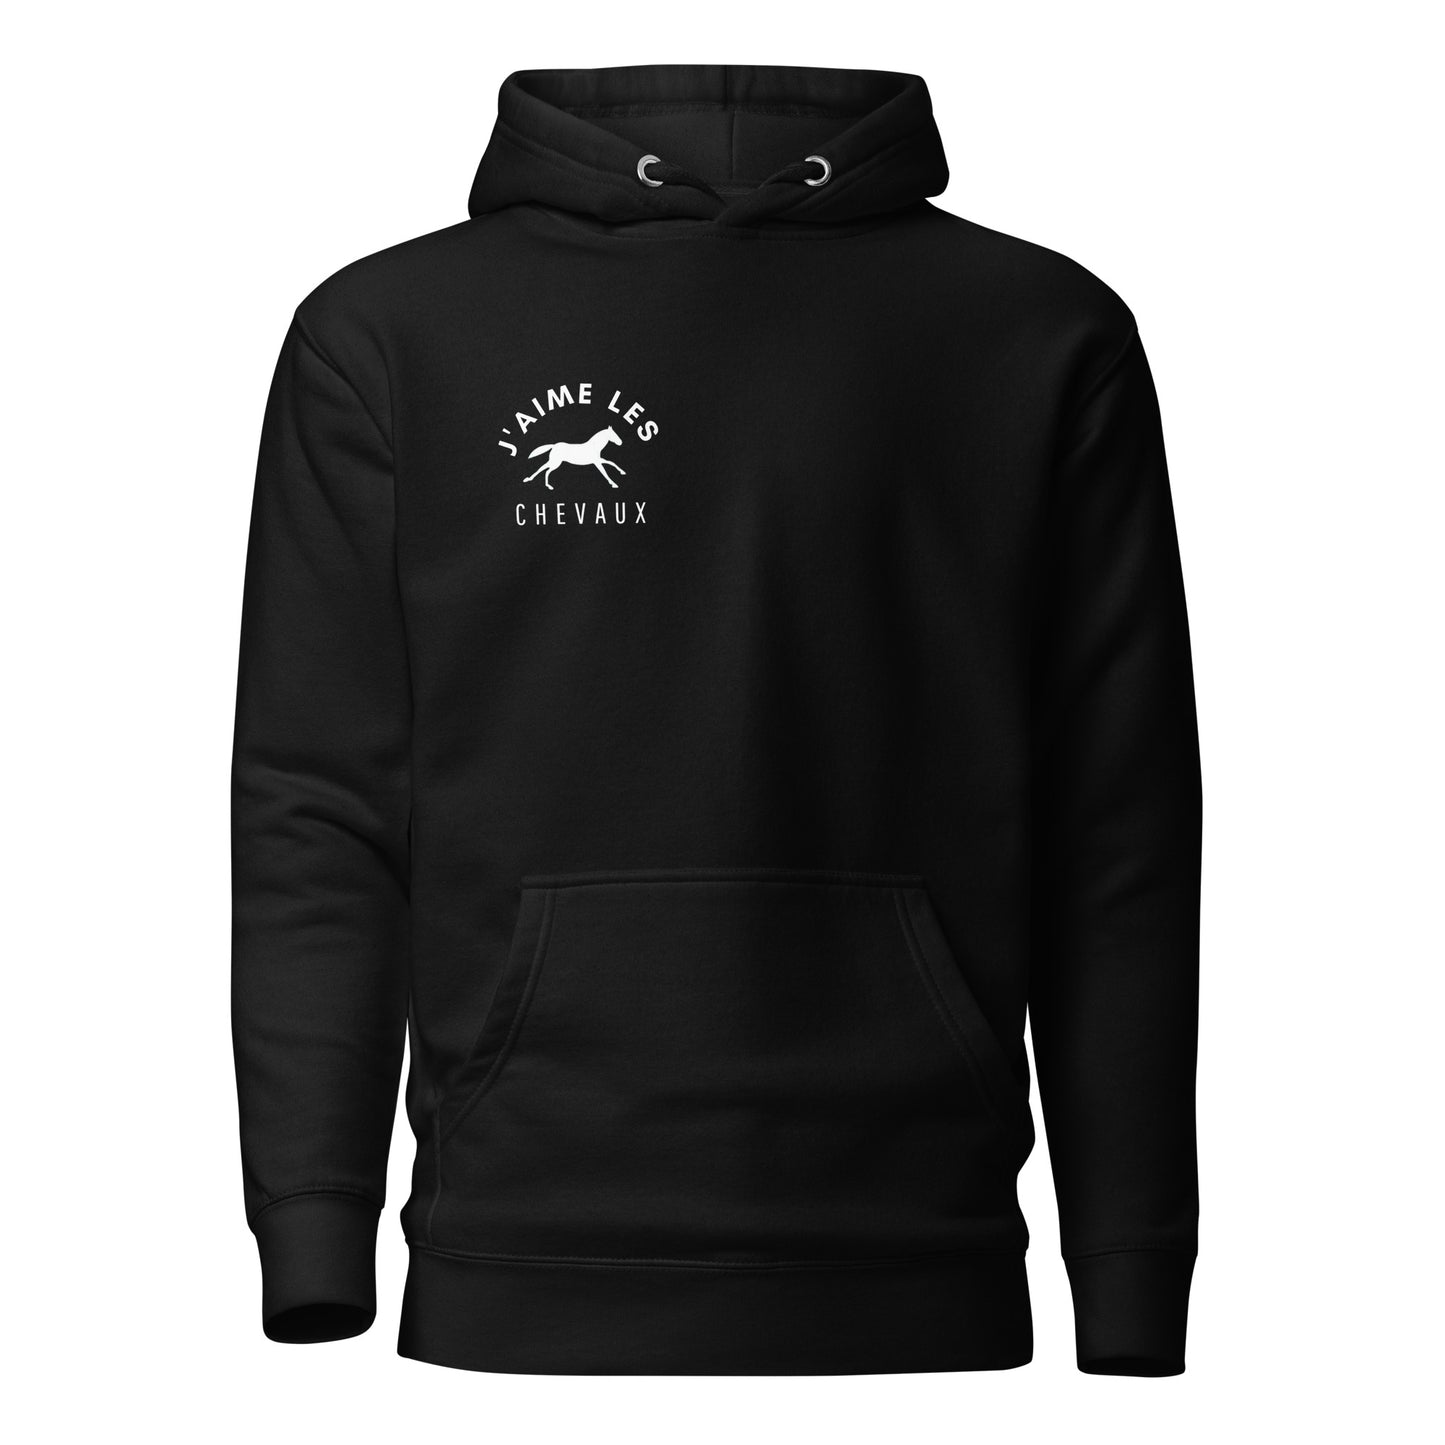 "I Love Horses" In French - Black Unisex Hooded Sweatshirt